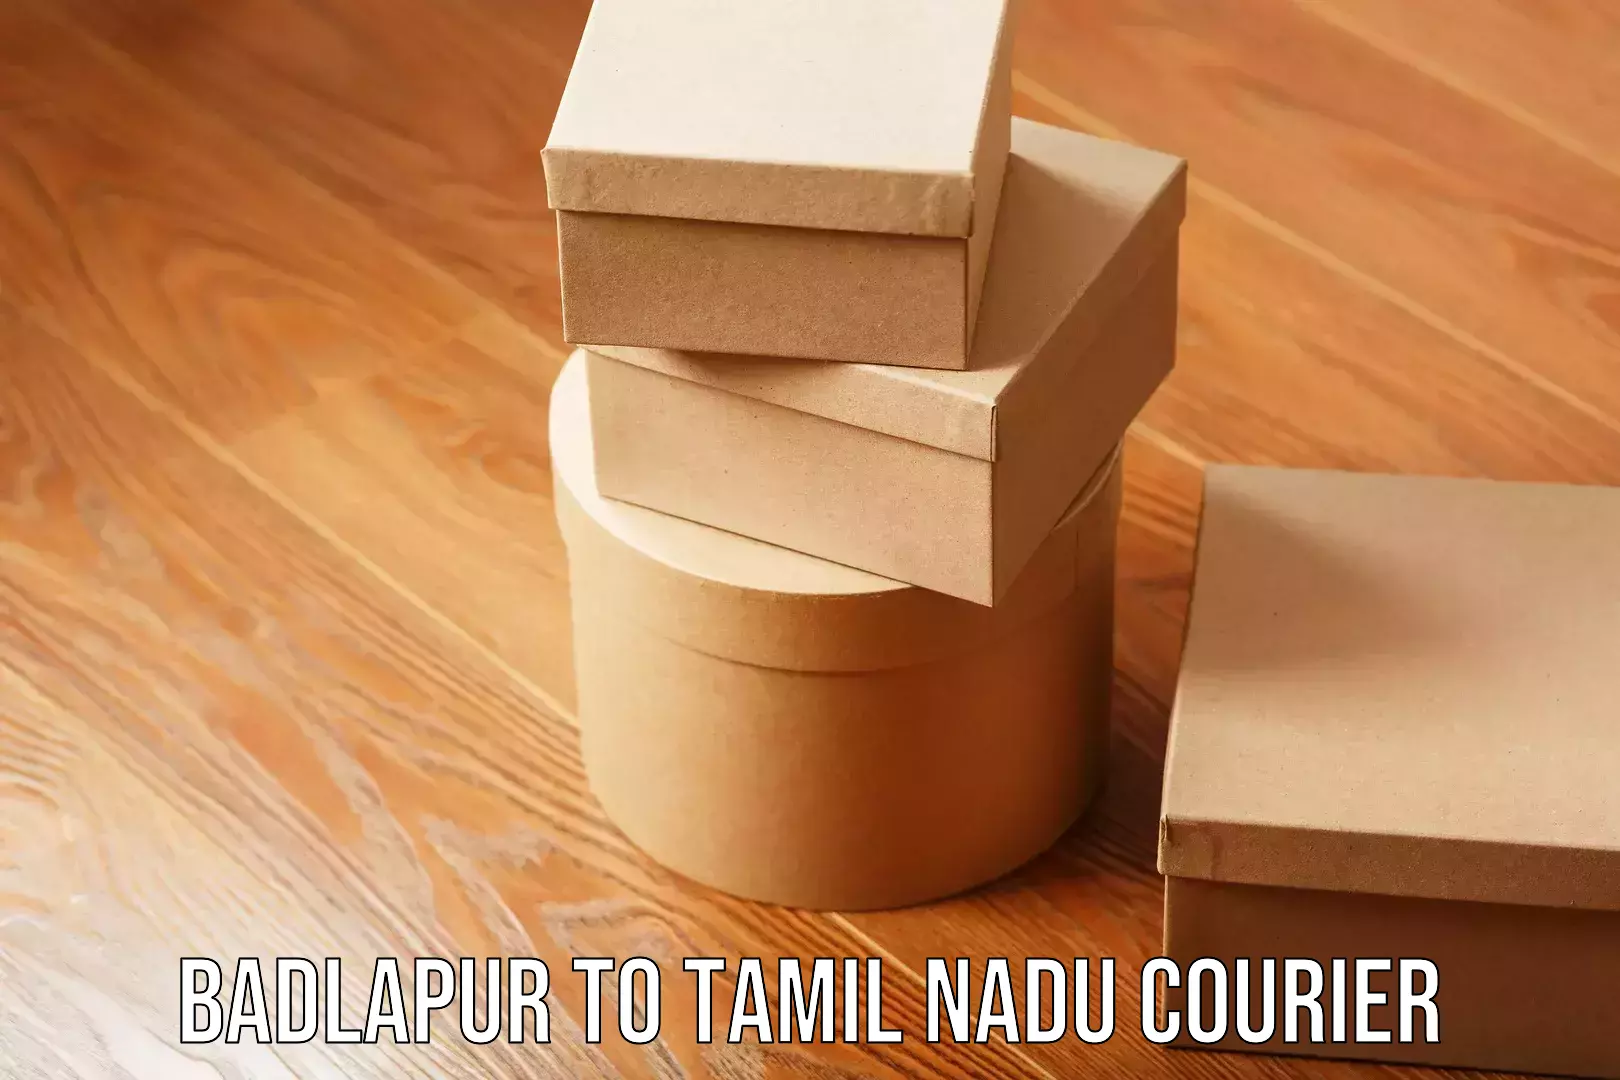 Cargo delivery service Badlapur to Tamil Nadu